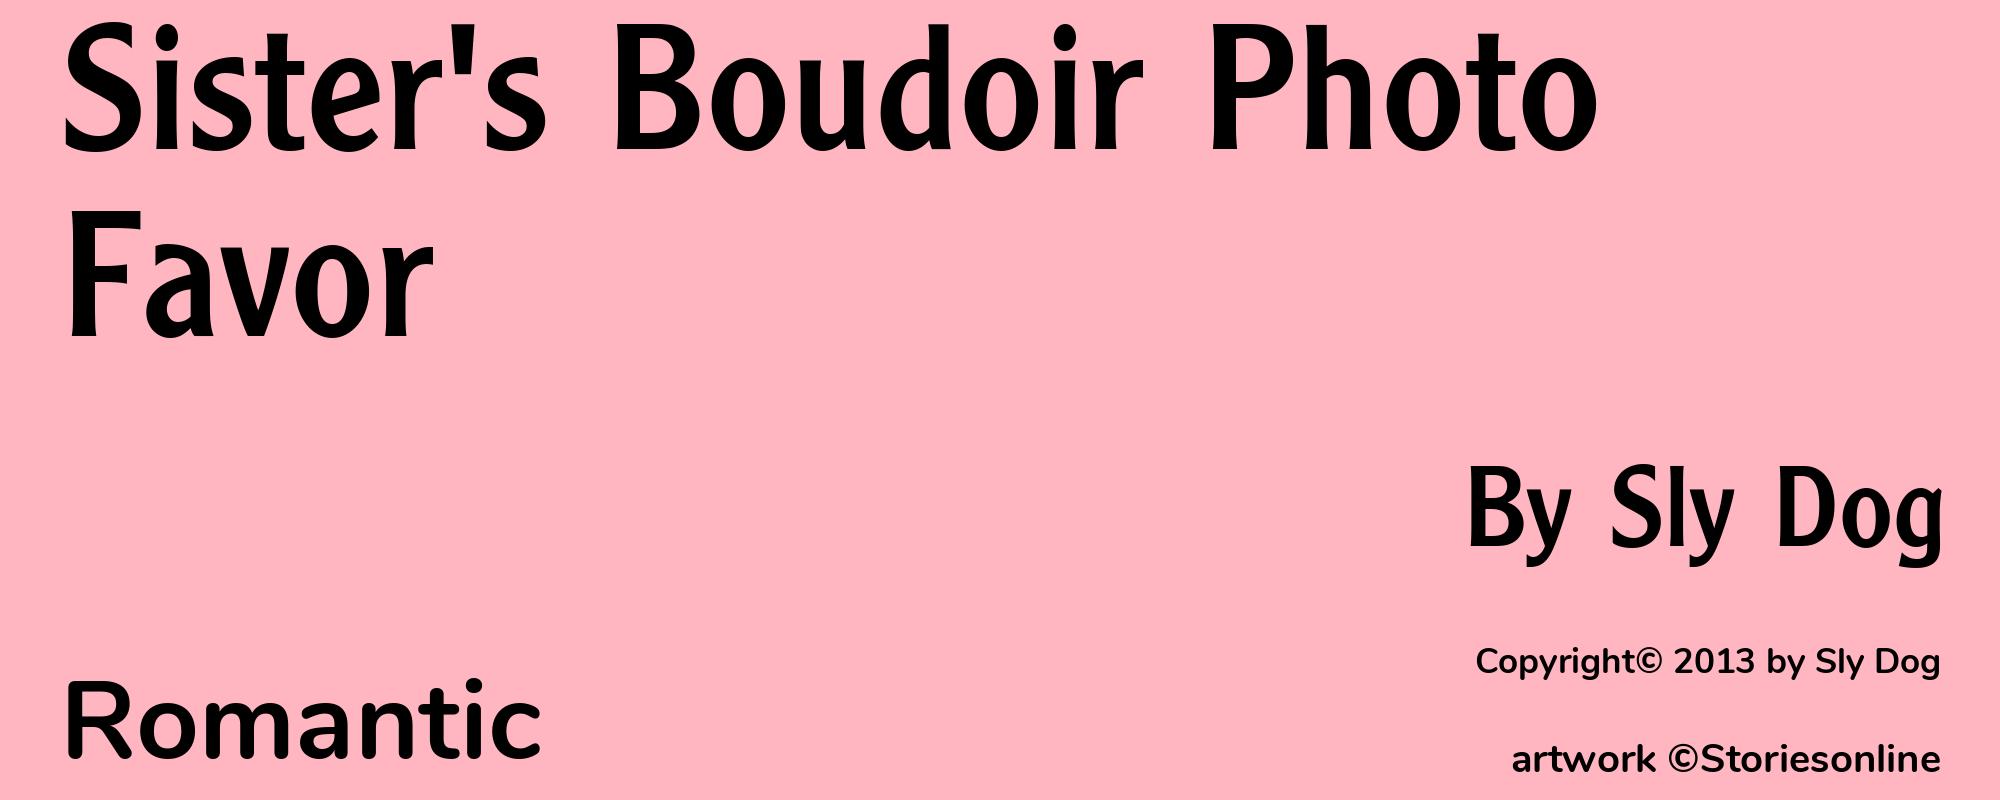 Sister's Boudoir Photo Favor - Cover